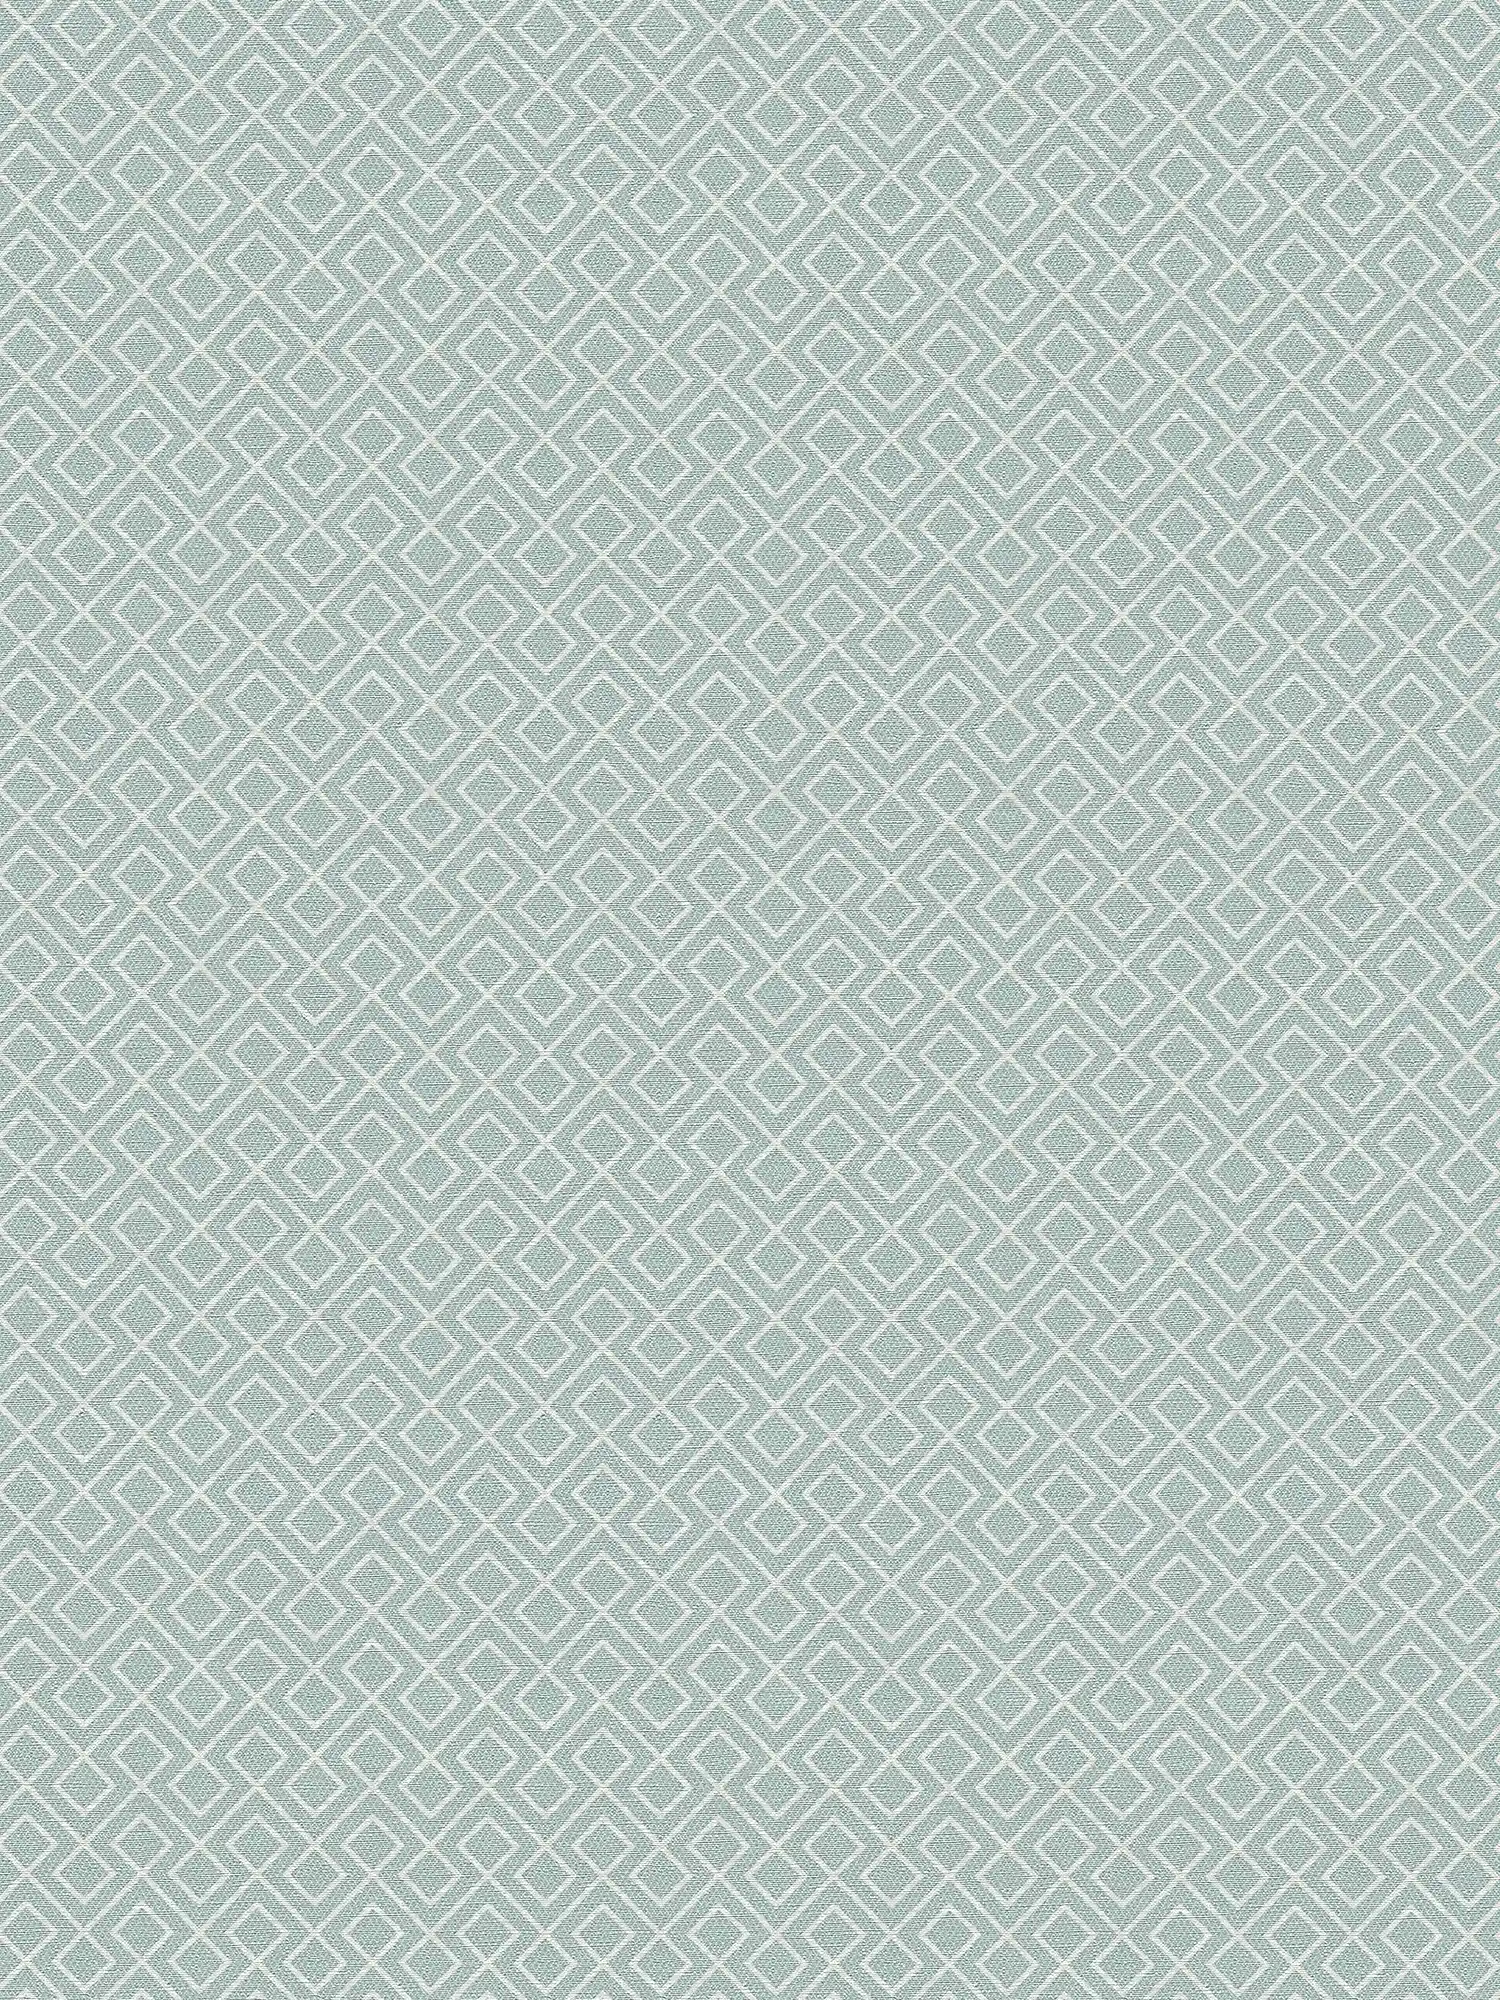 Scandi stijl grafisch patroon vliesbehang - blauw
